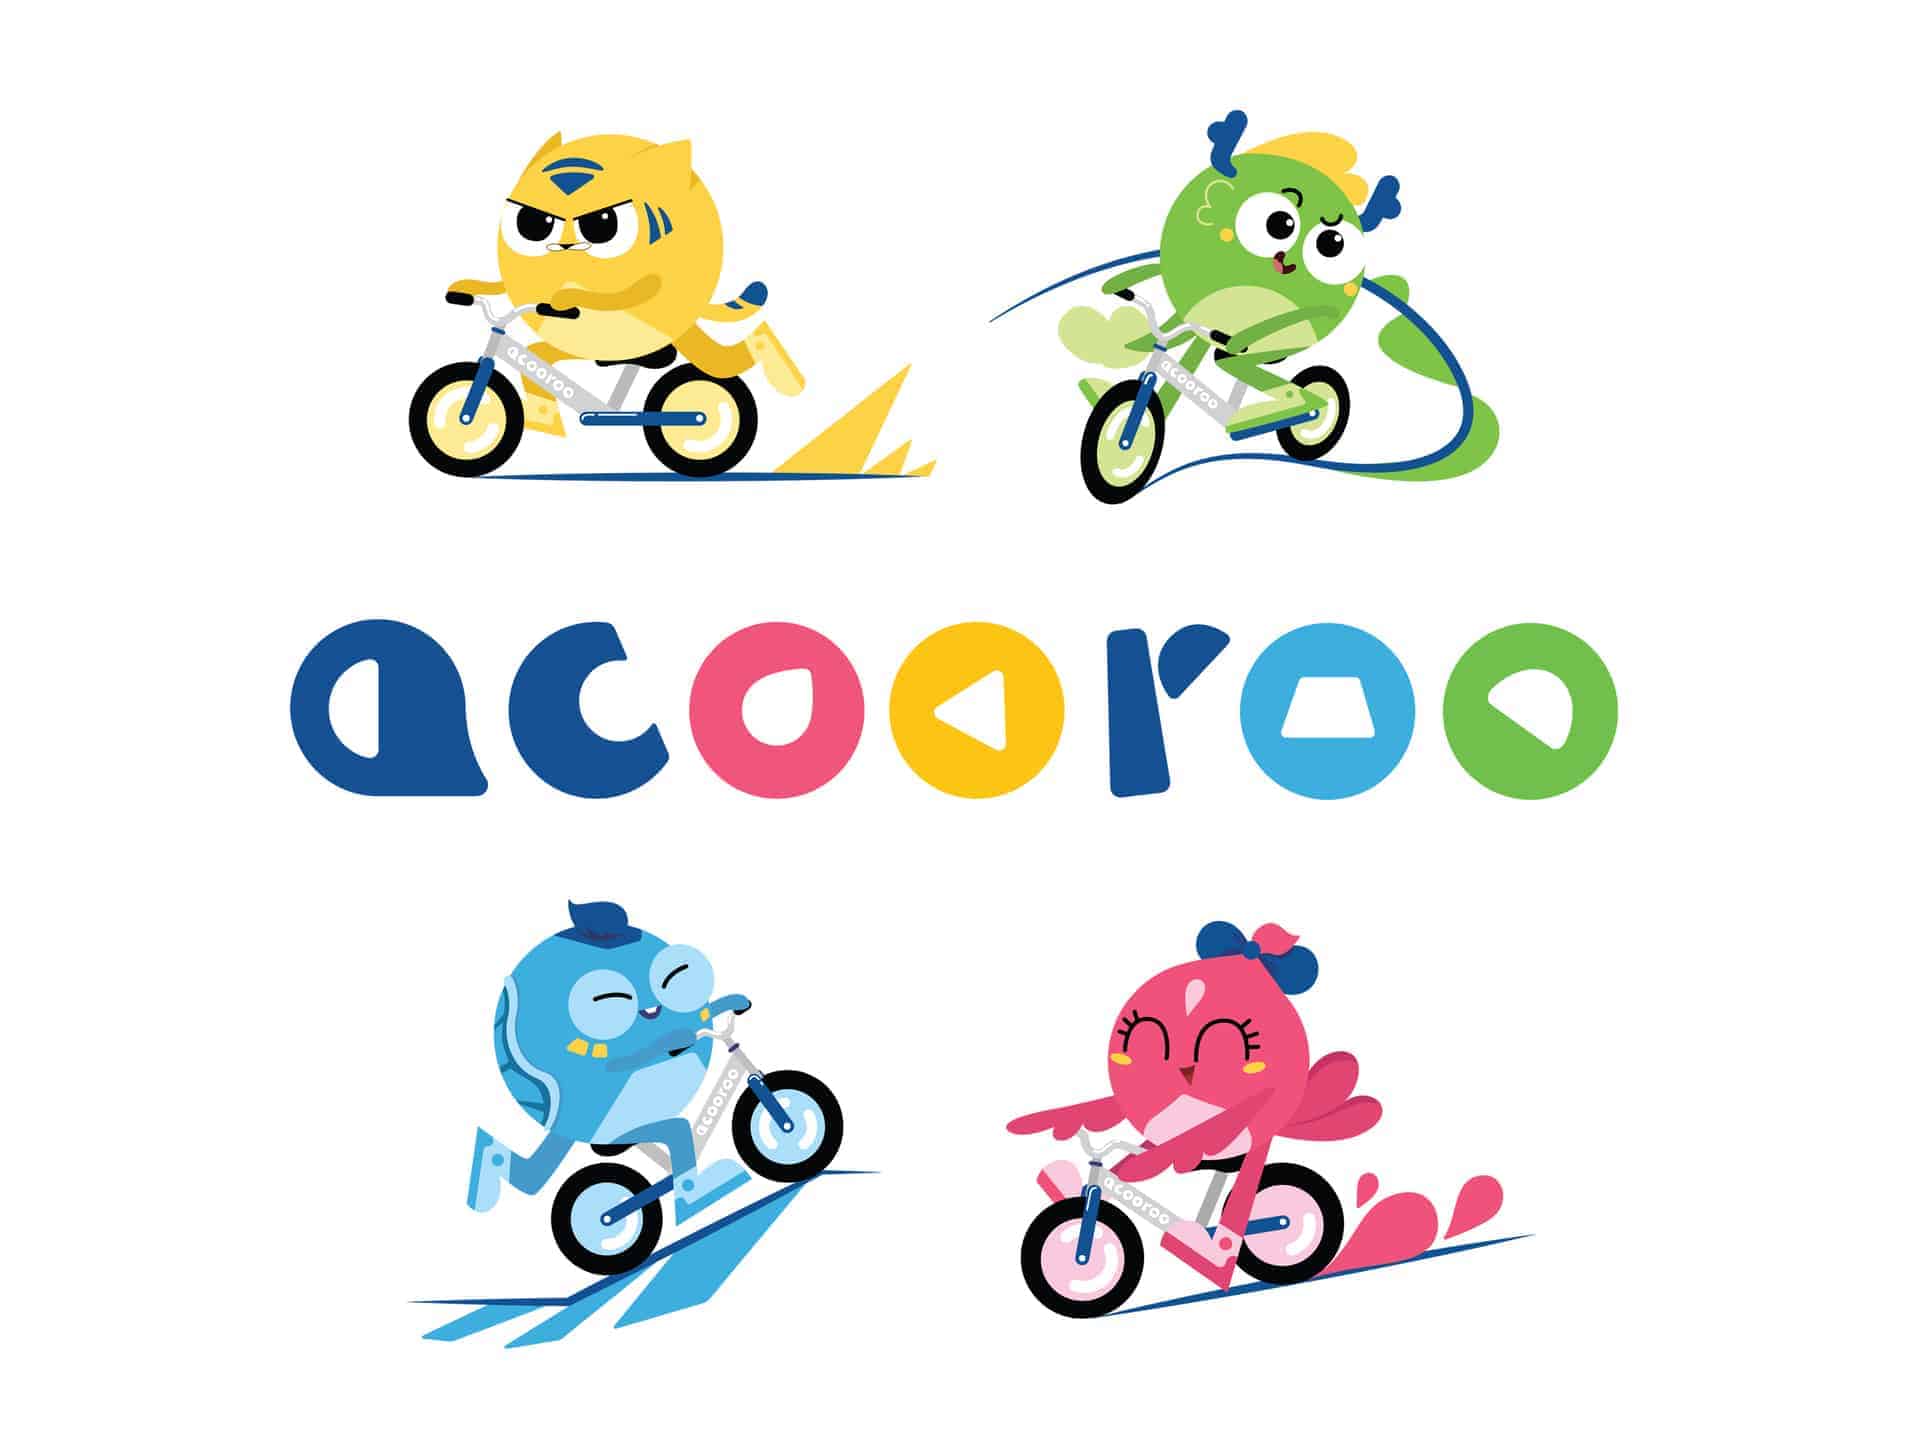 Acooroo Brand Identity